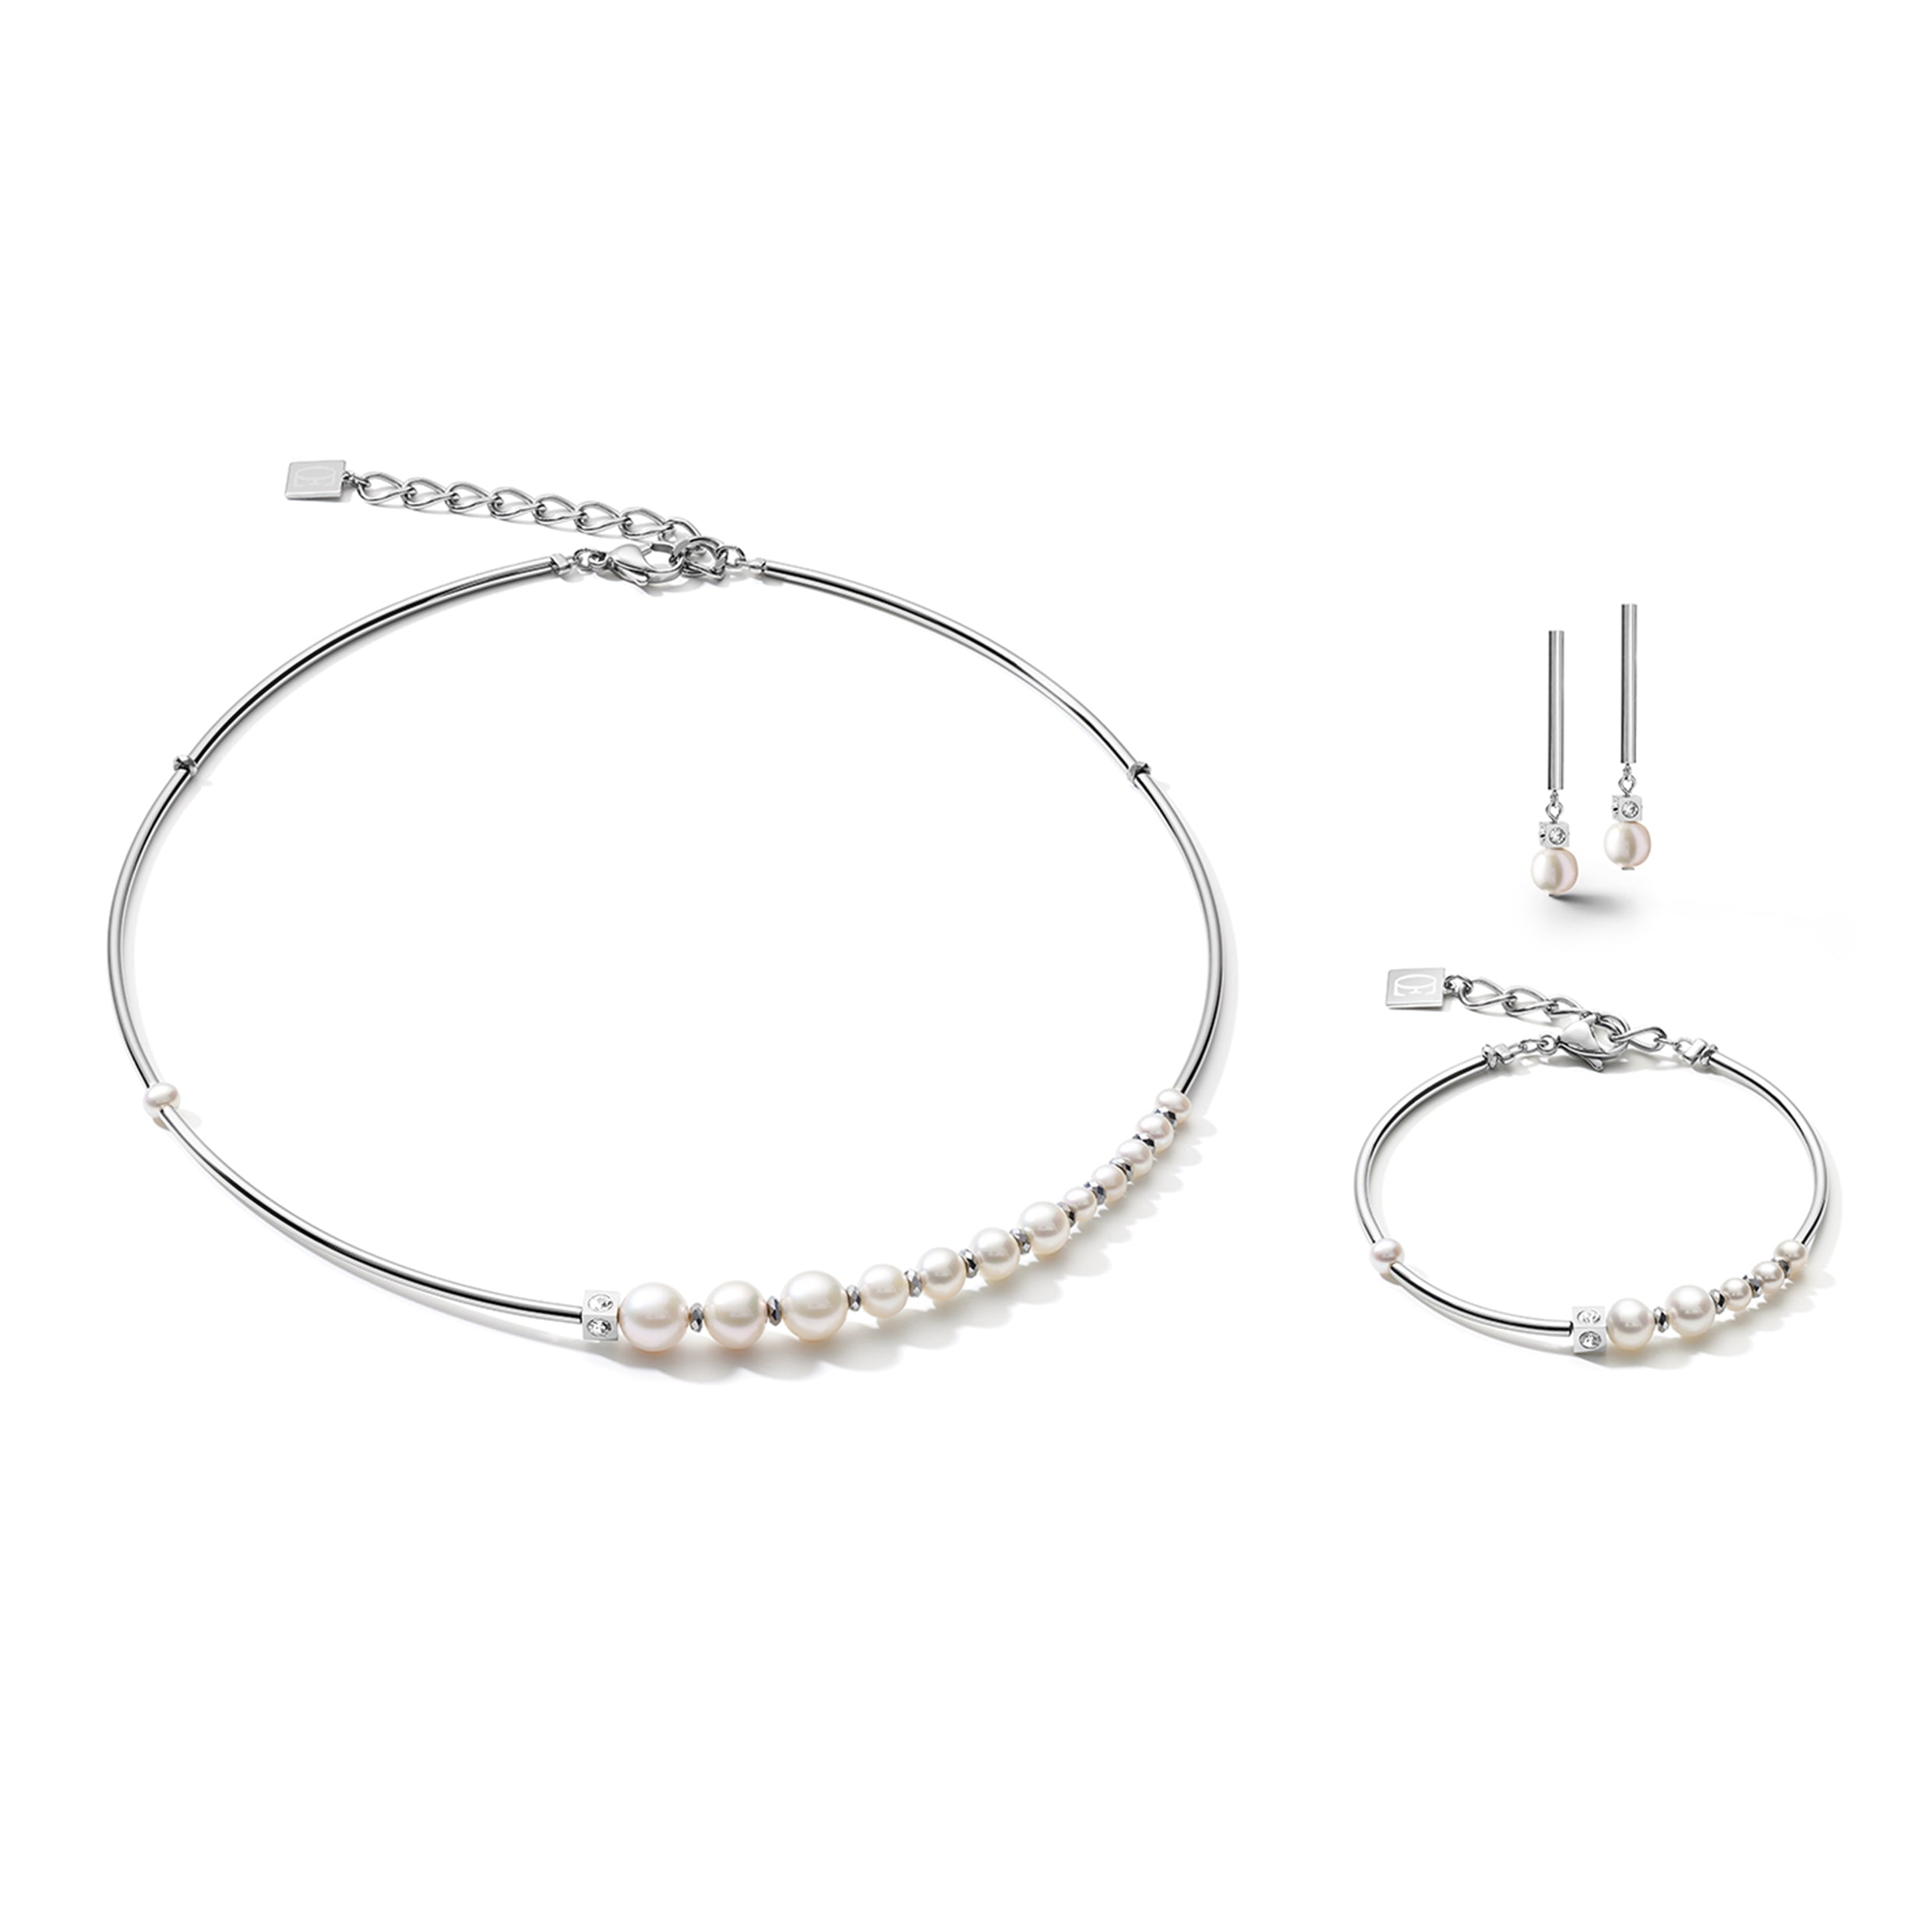 Freshwater Pearls on Stainless Steel Bracelet 1102/30_1417